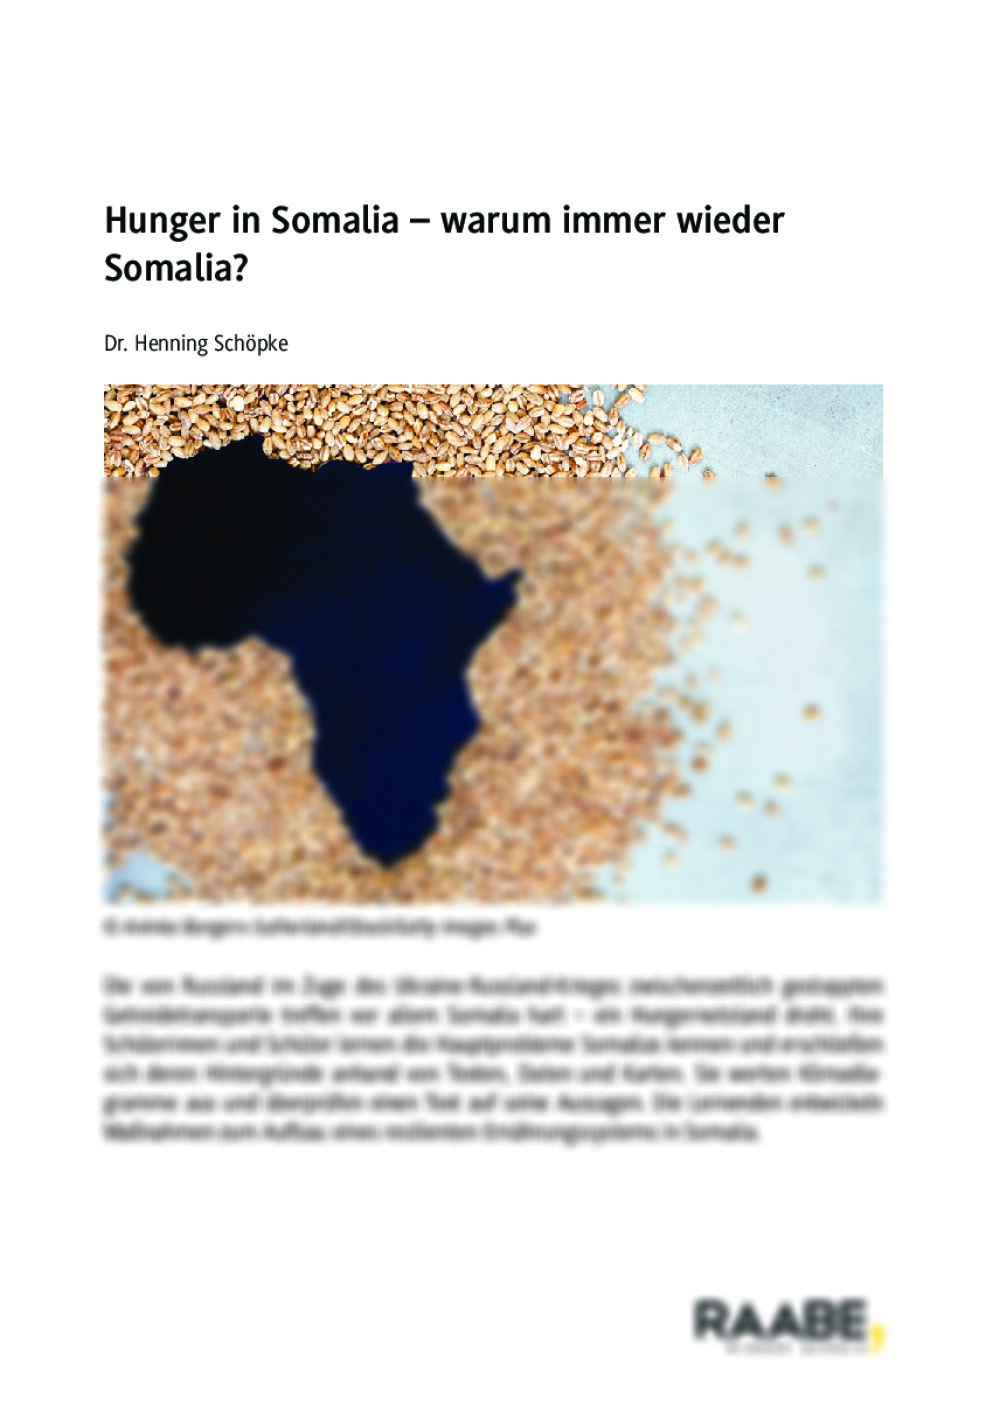 Hunger in Somalia - Seite 1